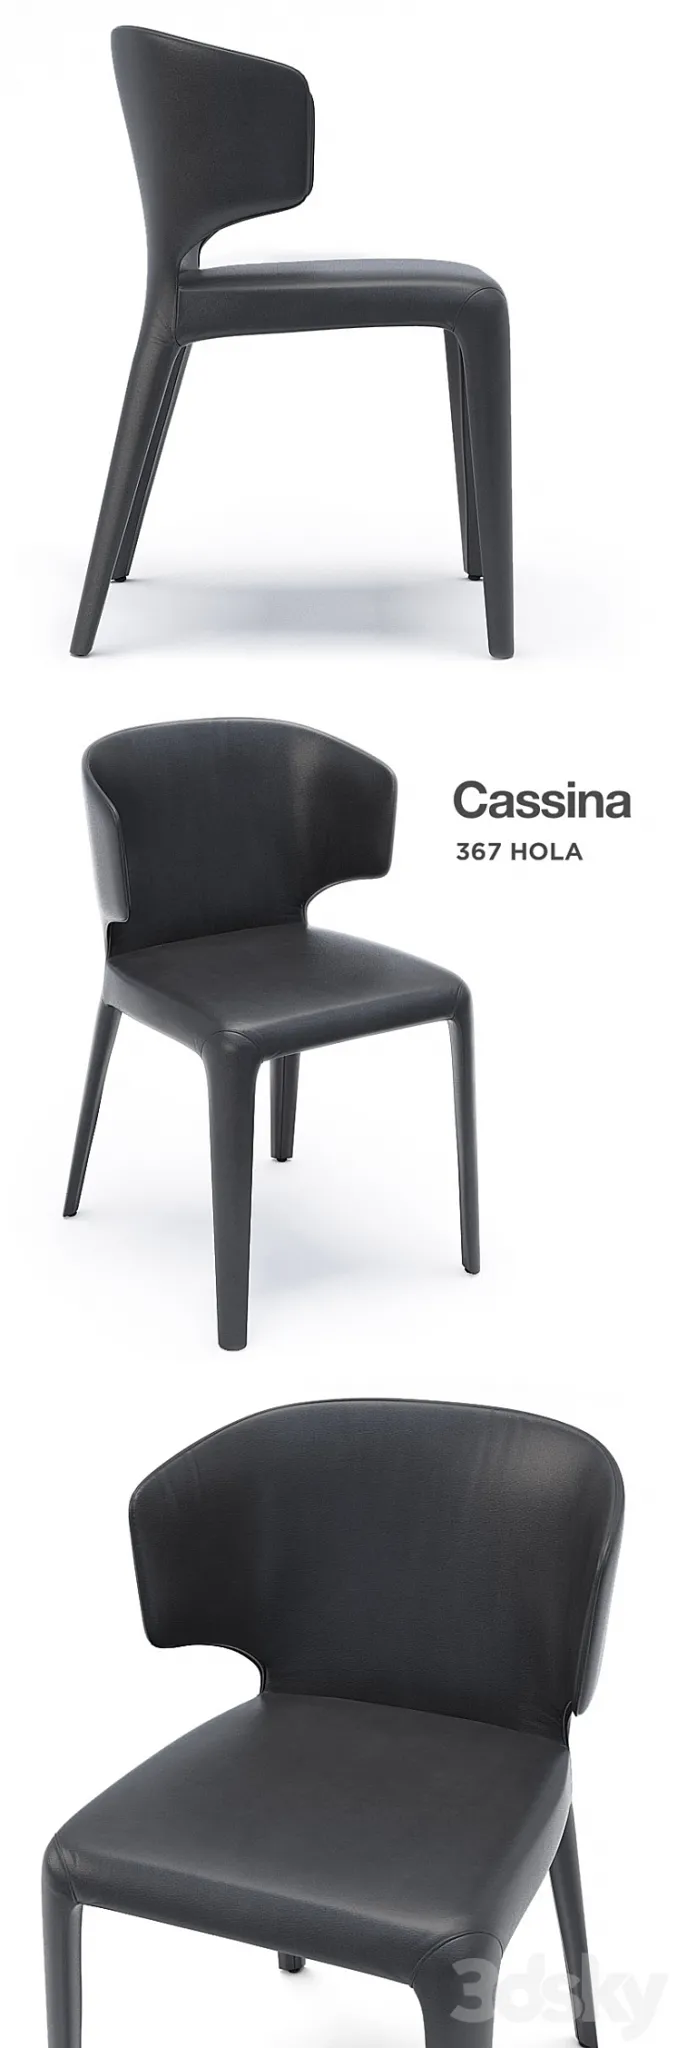 Cassina 367 HOLA 3DS Max